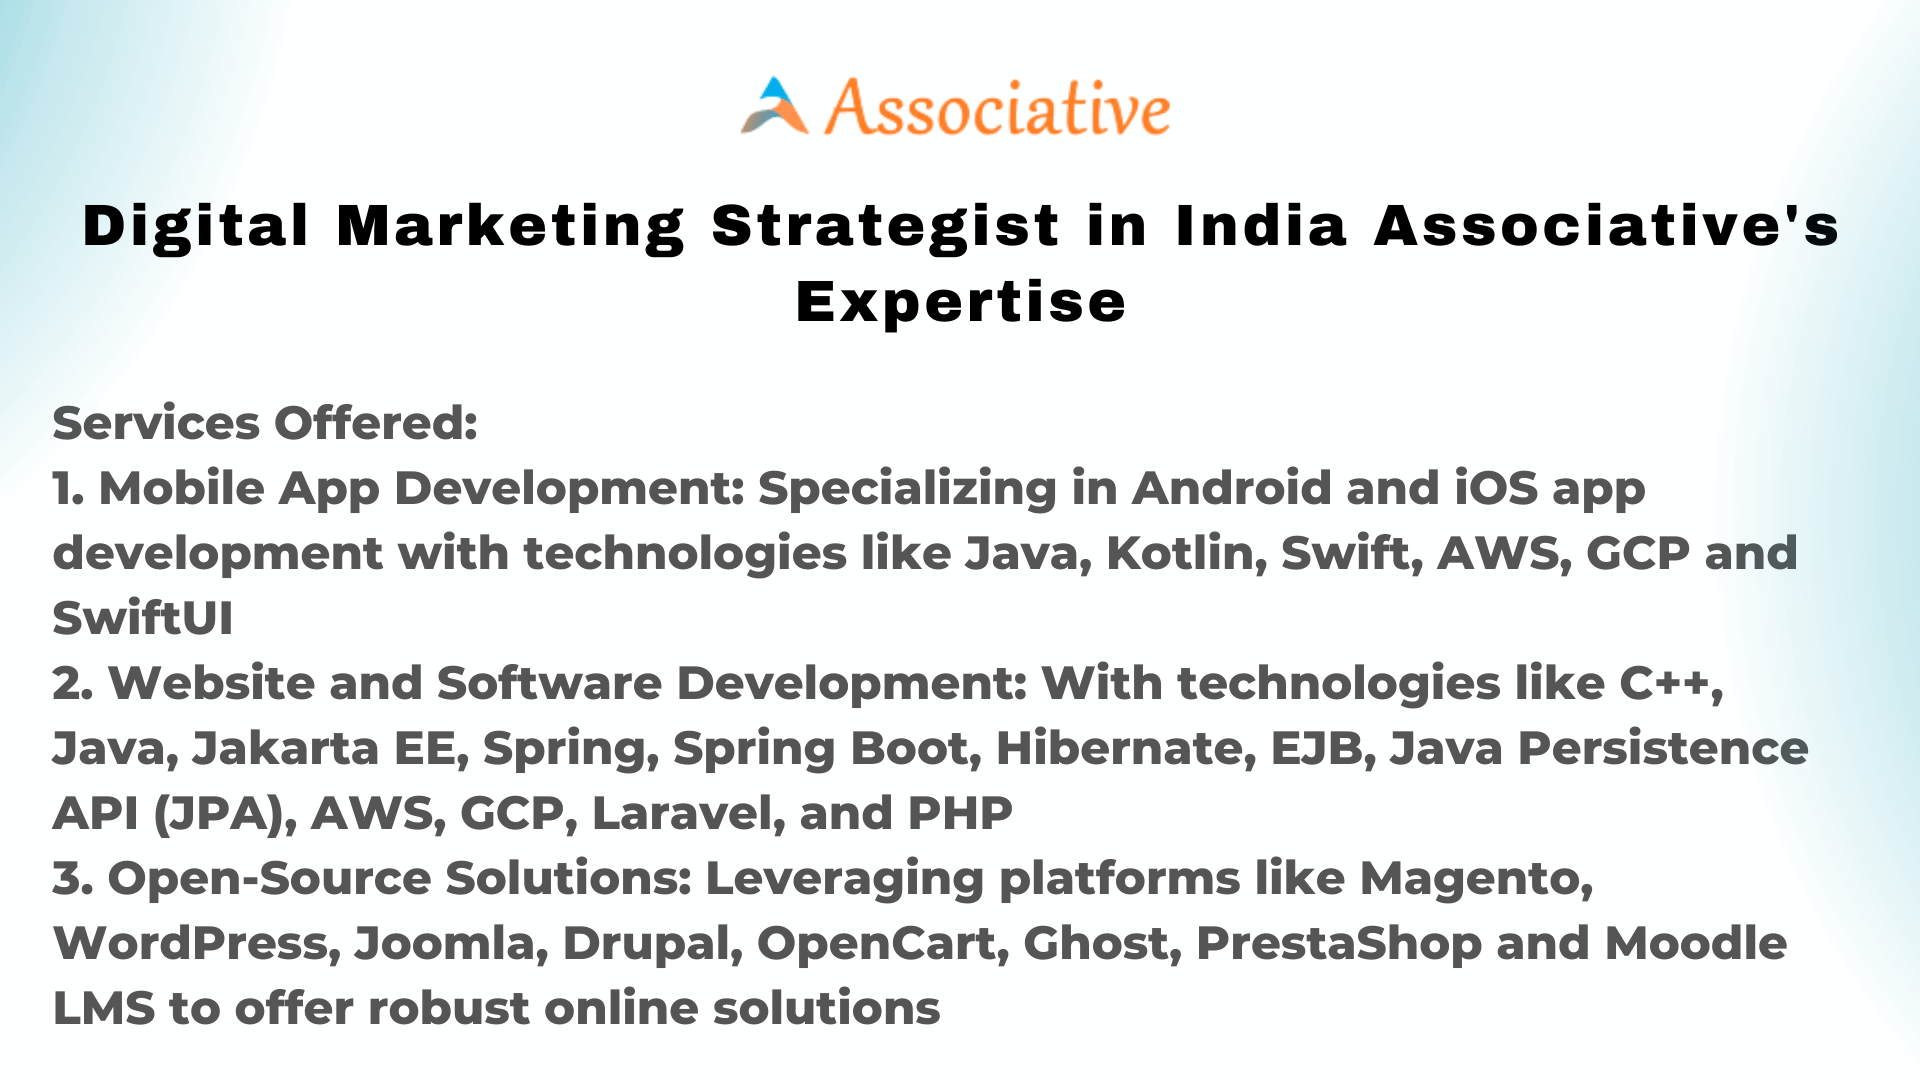 Digital Marketing Strategist in India Associative's Expertise